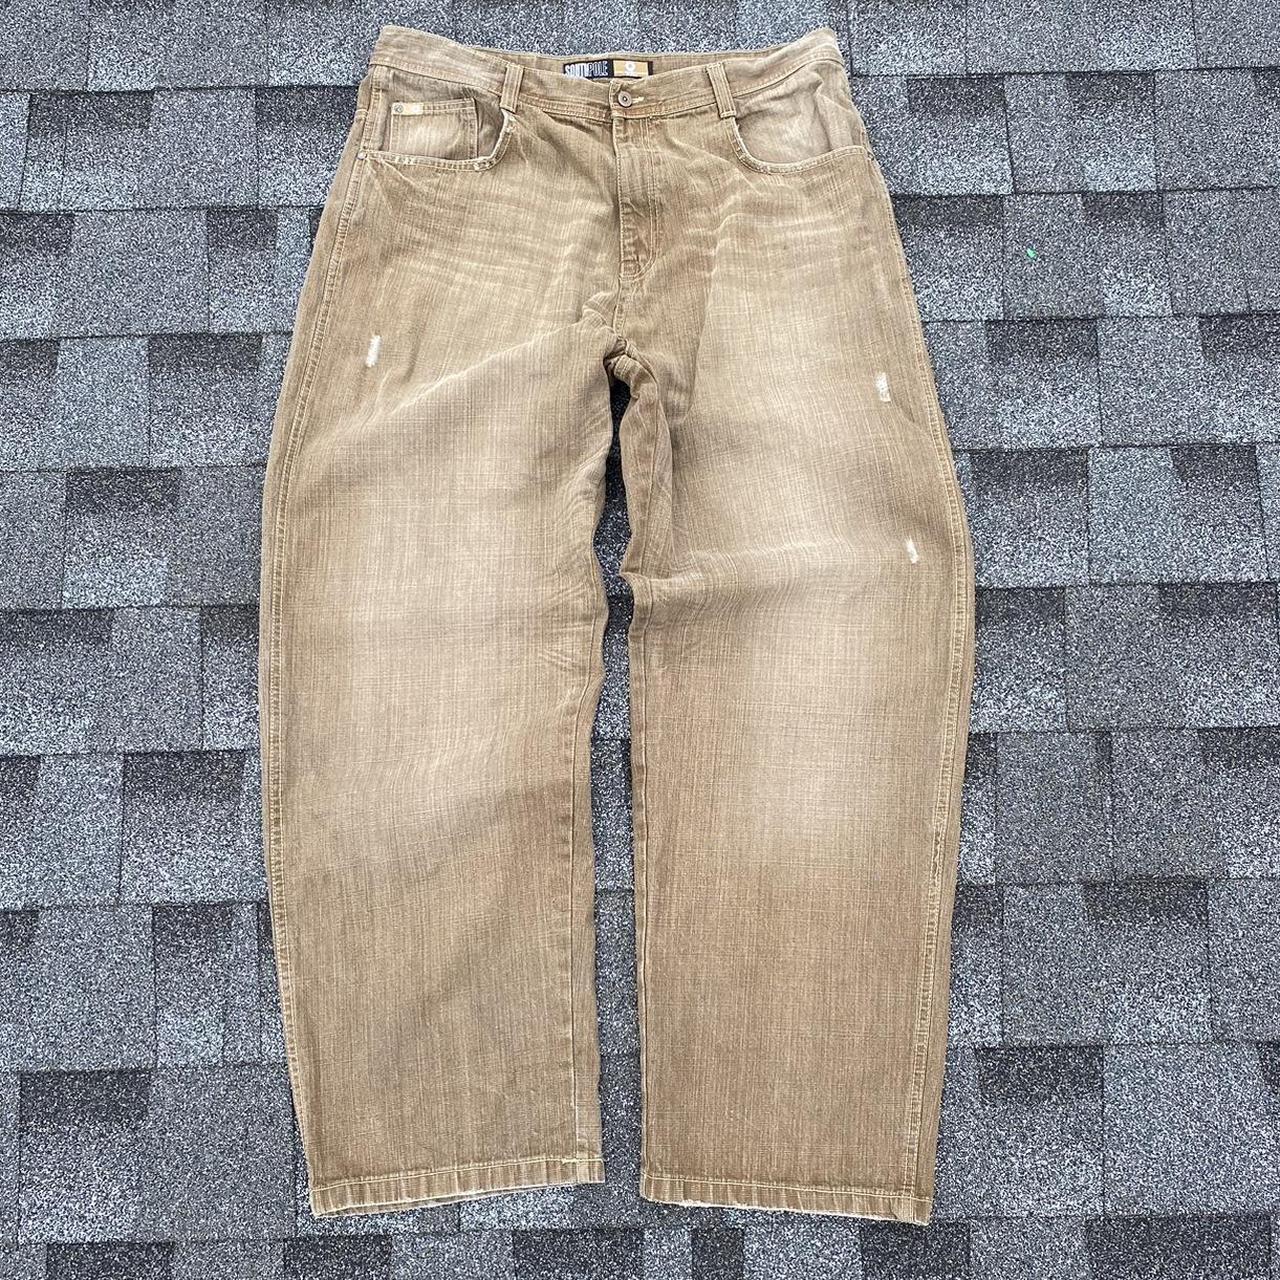 Southpole Men's Tan and Khaki Jeans | Depop